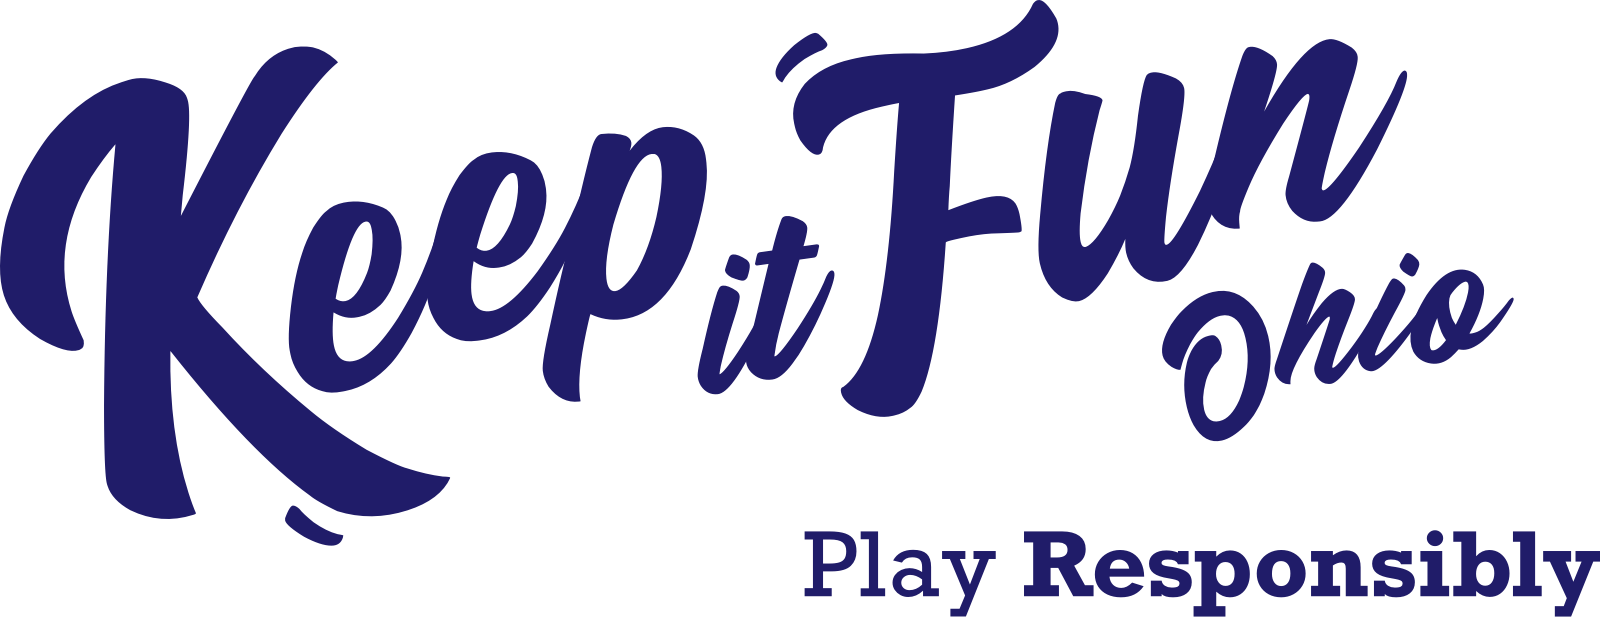 Keep It Fun Ohio - Play Responsibly